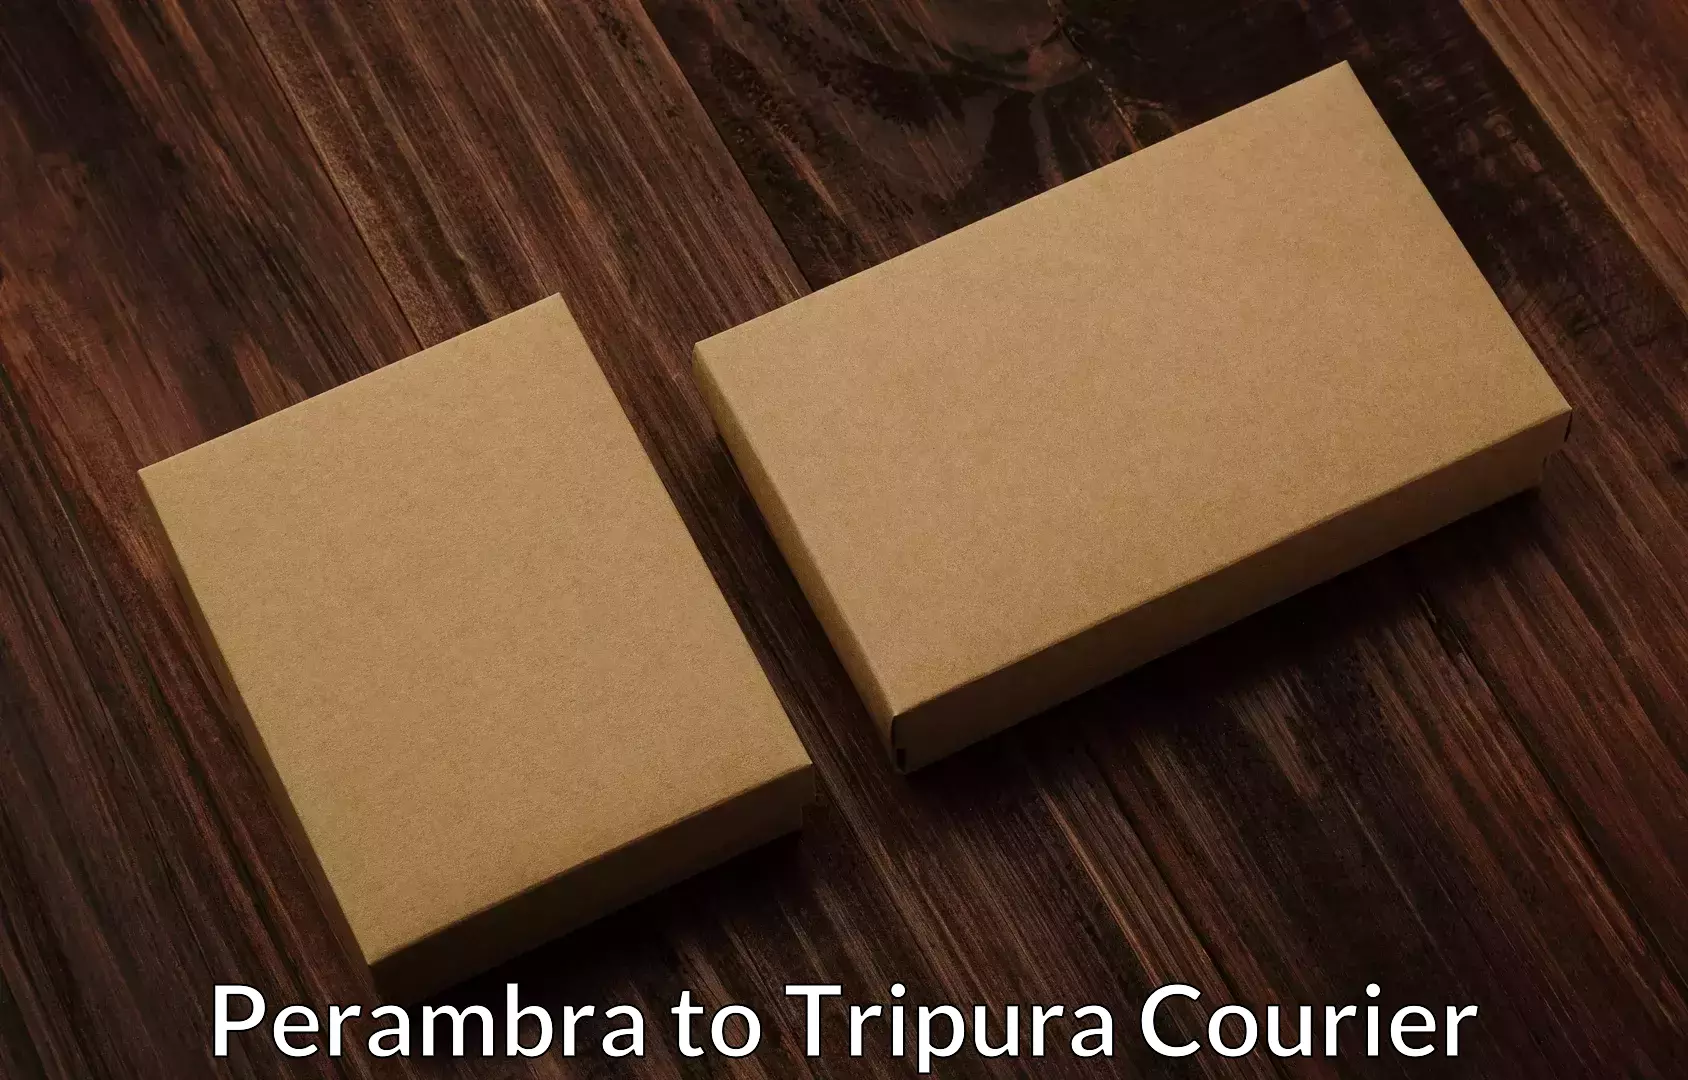 Specialized moving company Perambra to Tripura